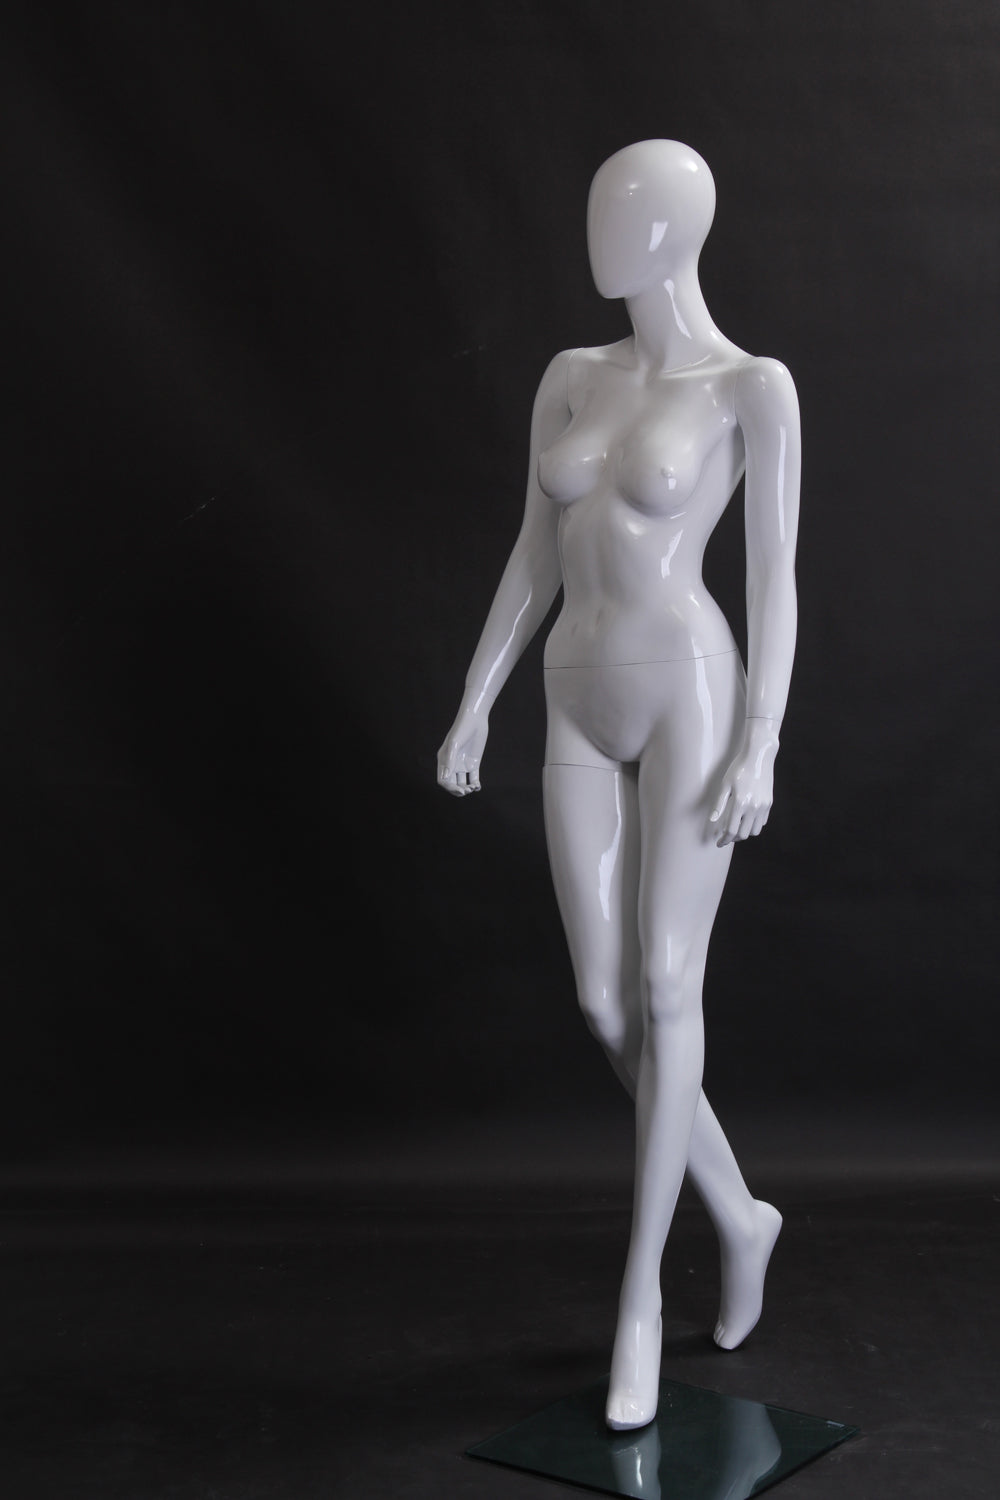 Chloe 3: Female Egghead Mannequin: Glossy White